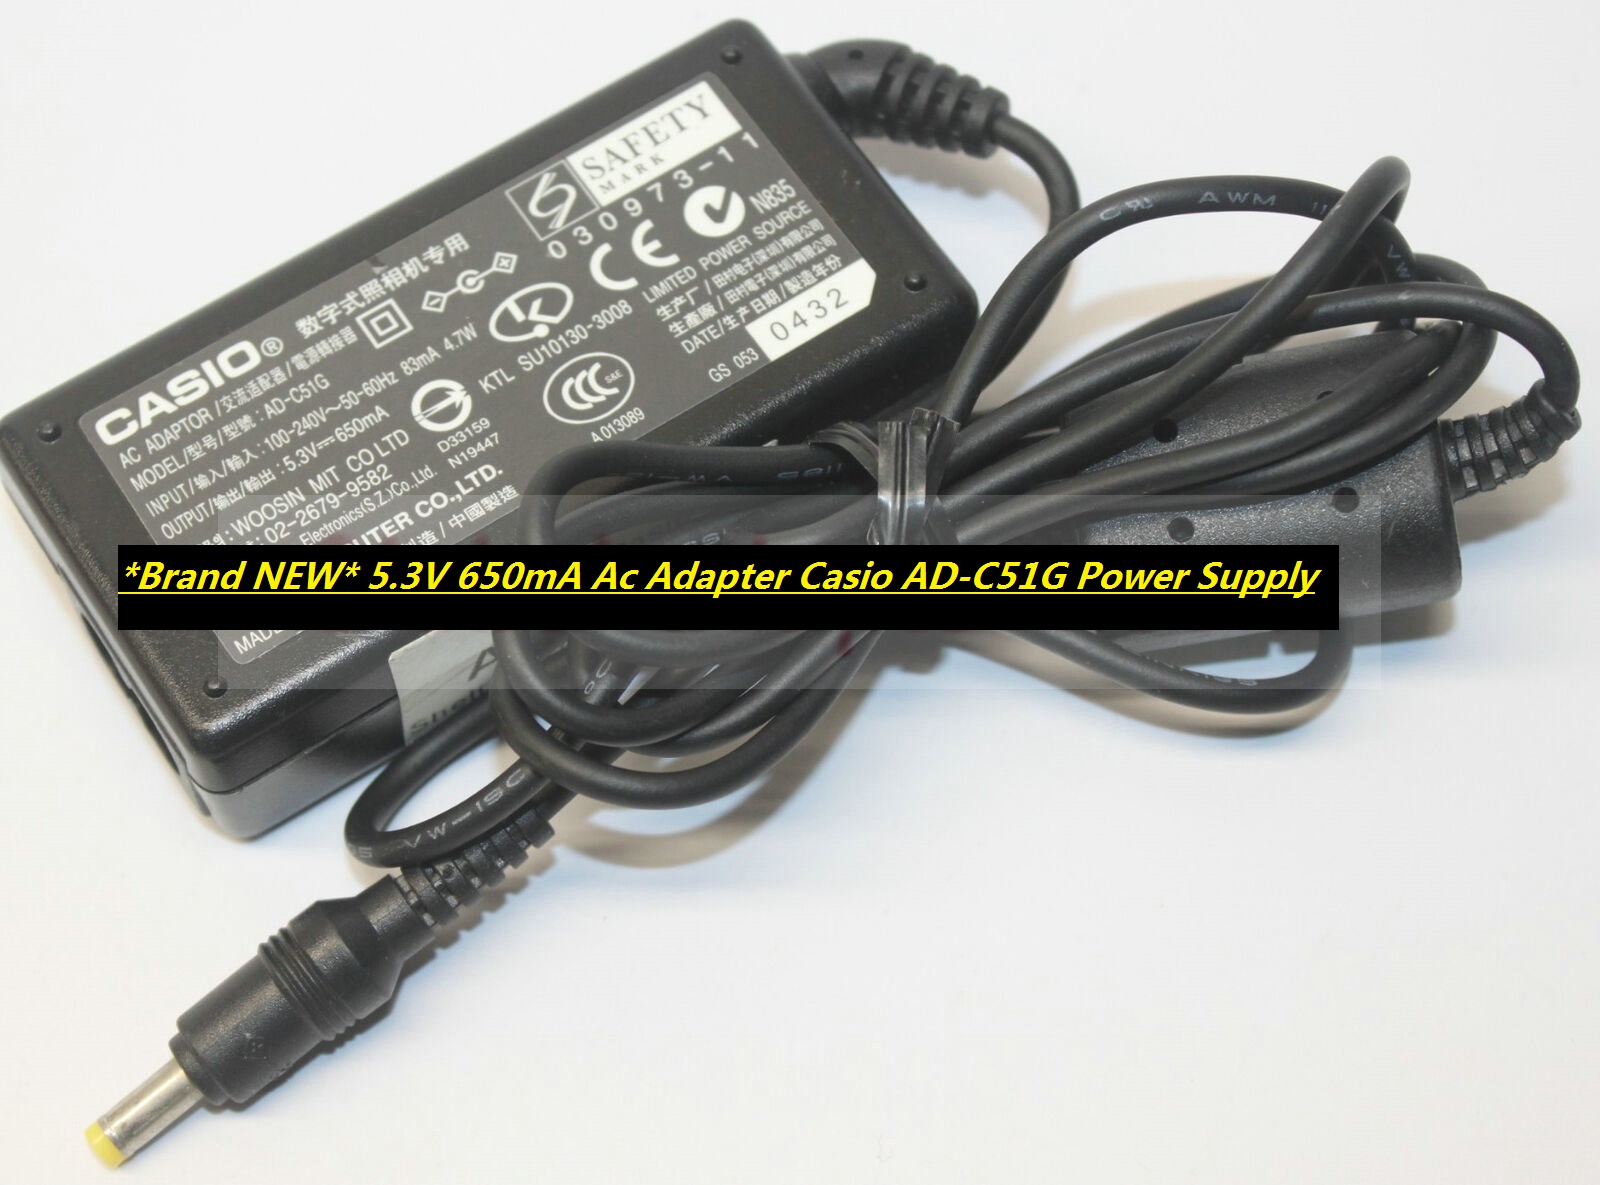 *Brand NEW* 5.3V 650mA Ac Adapter Casio AD-C51G Power Supply